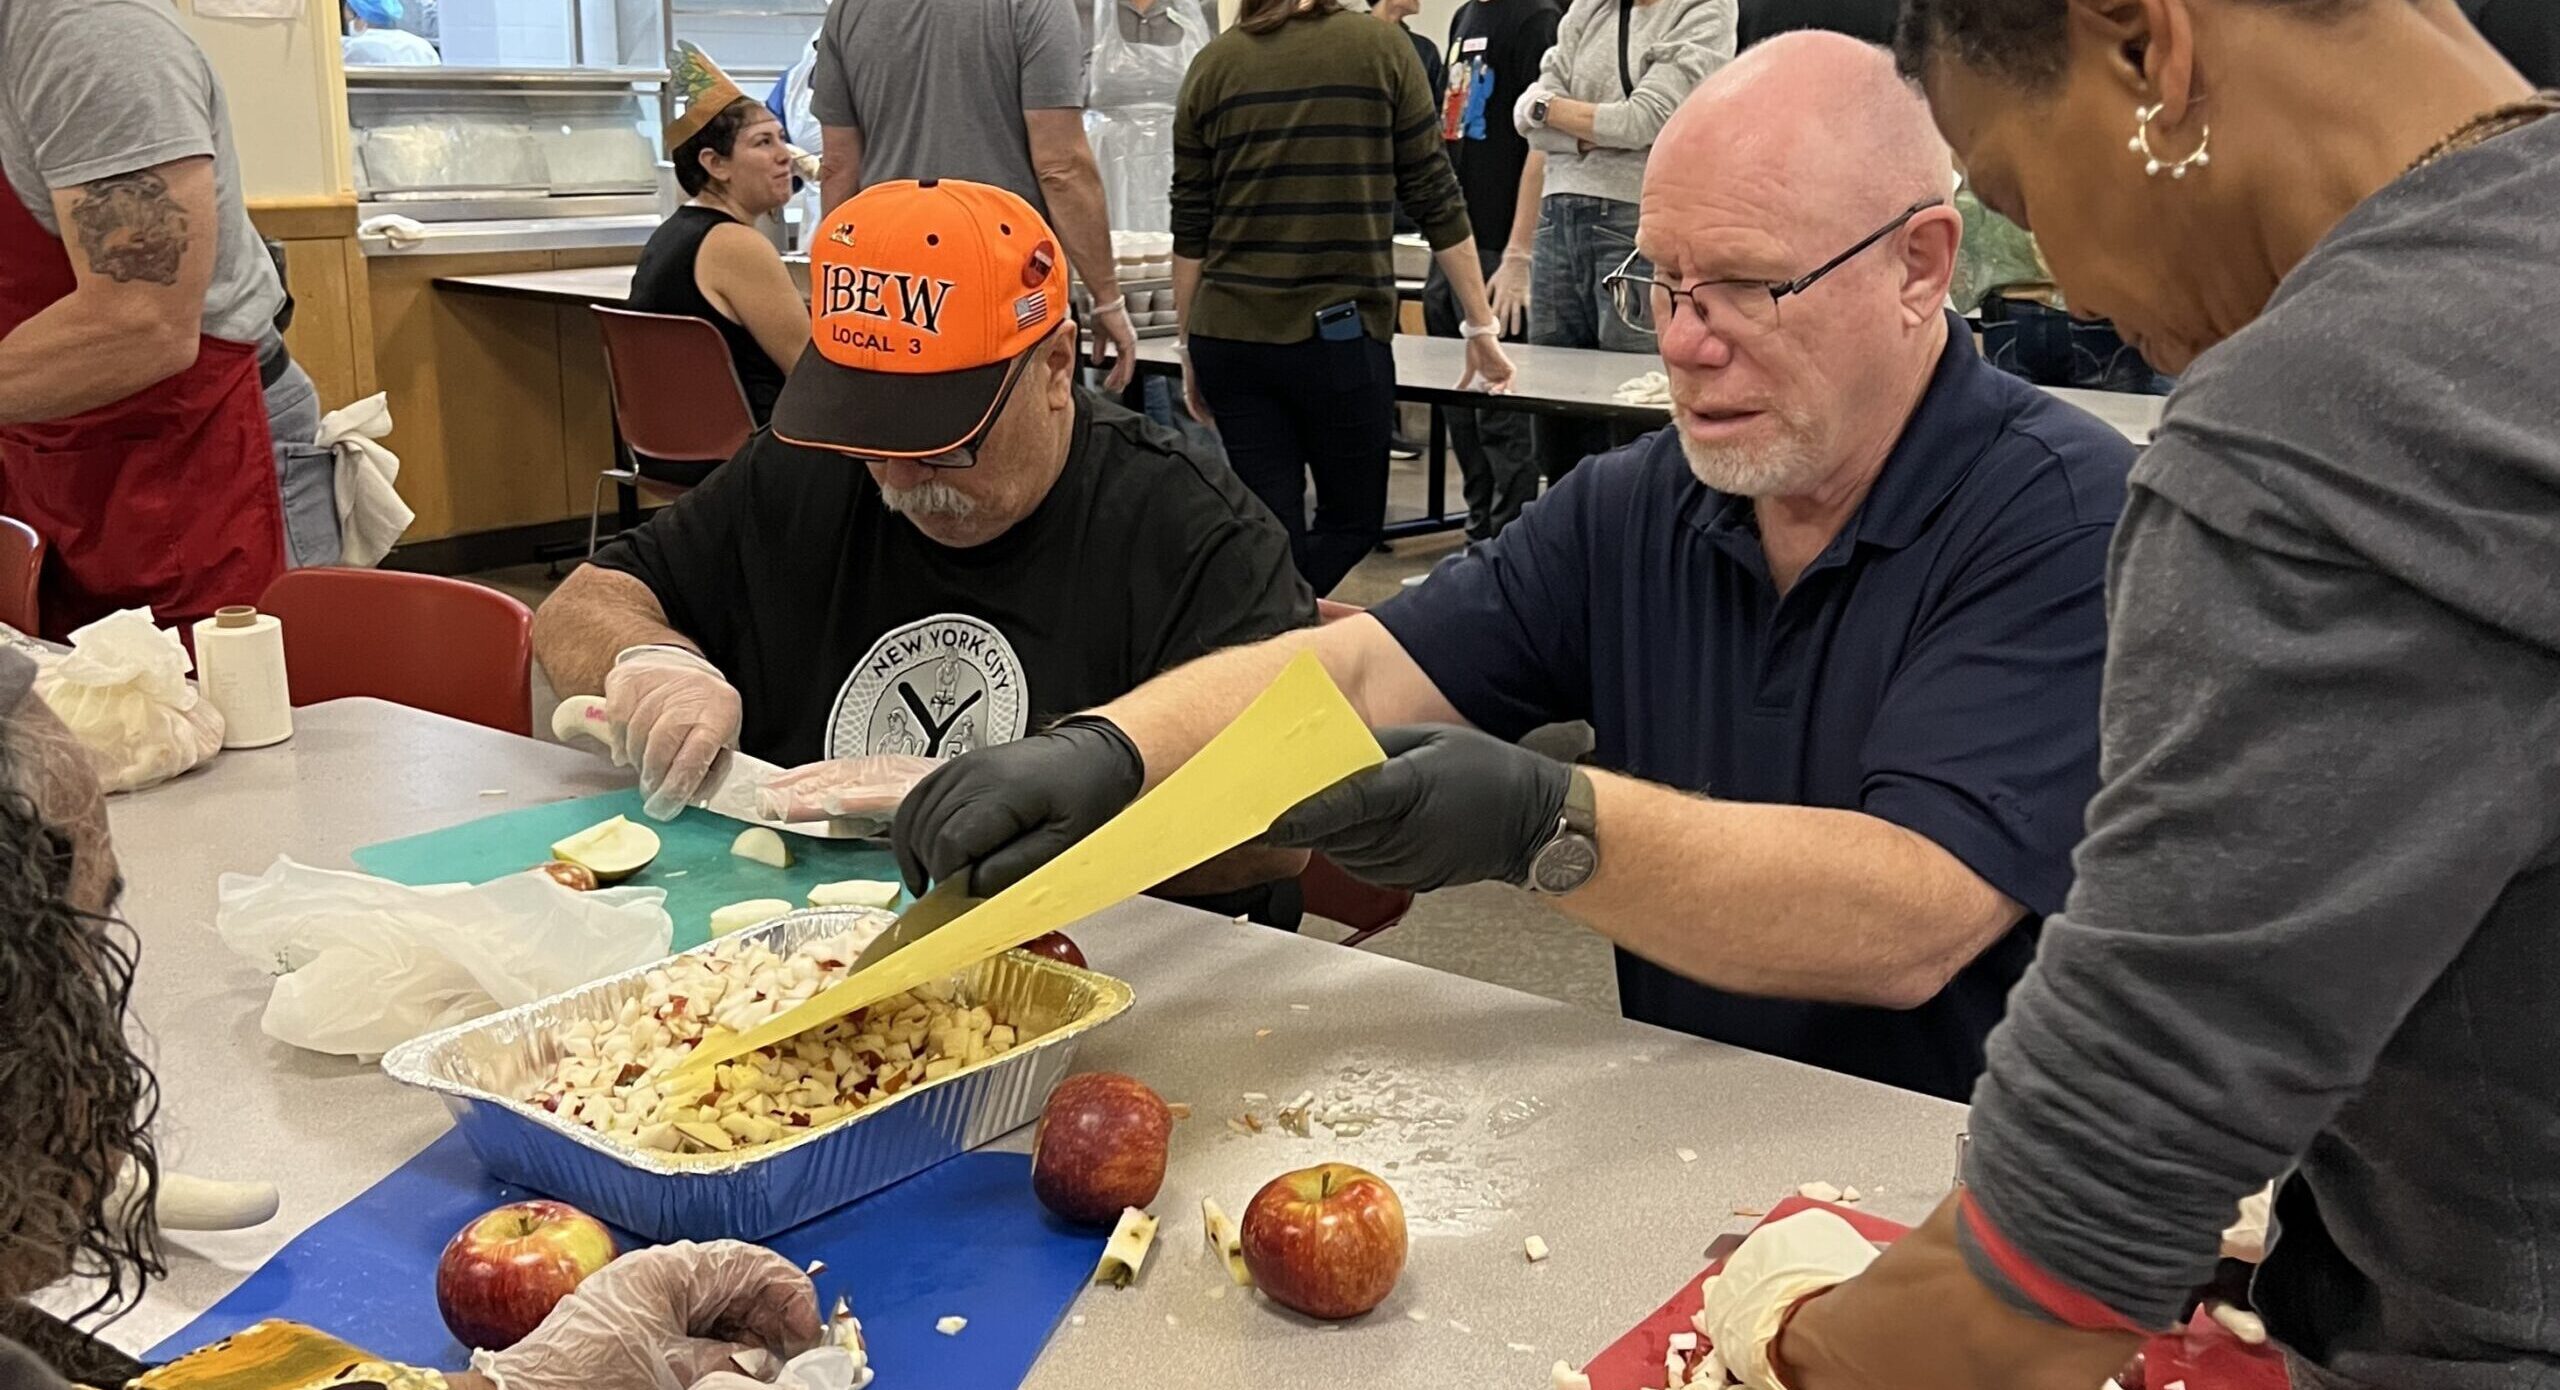 Volunteers chop apples at a long table